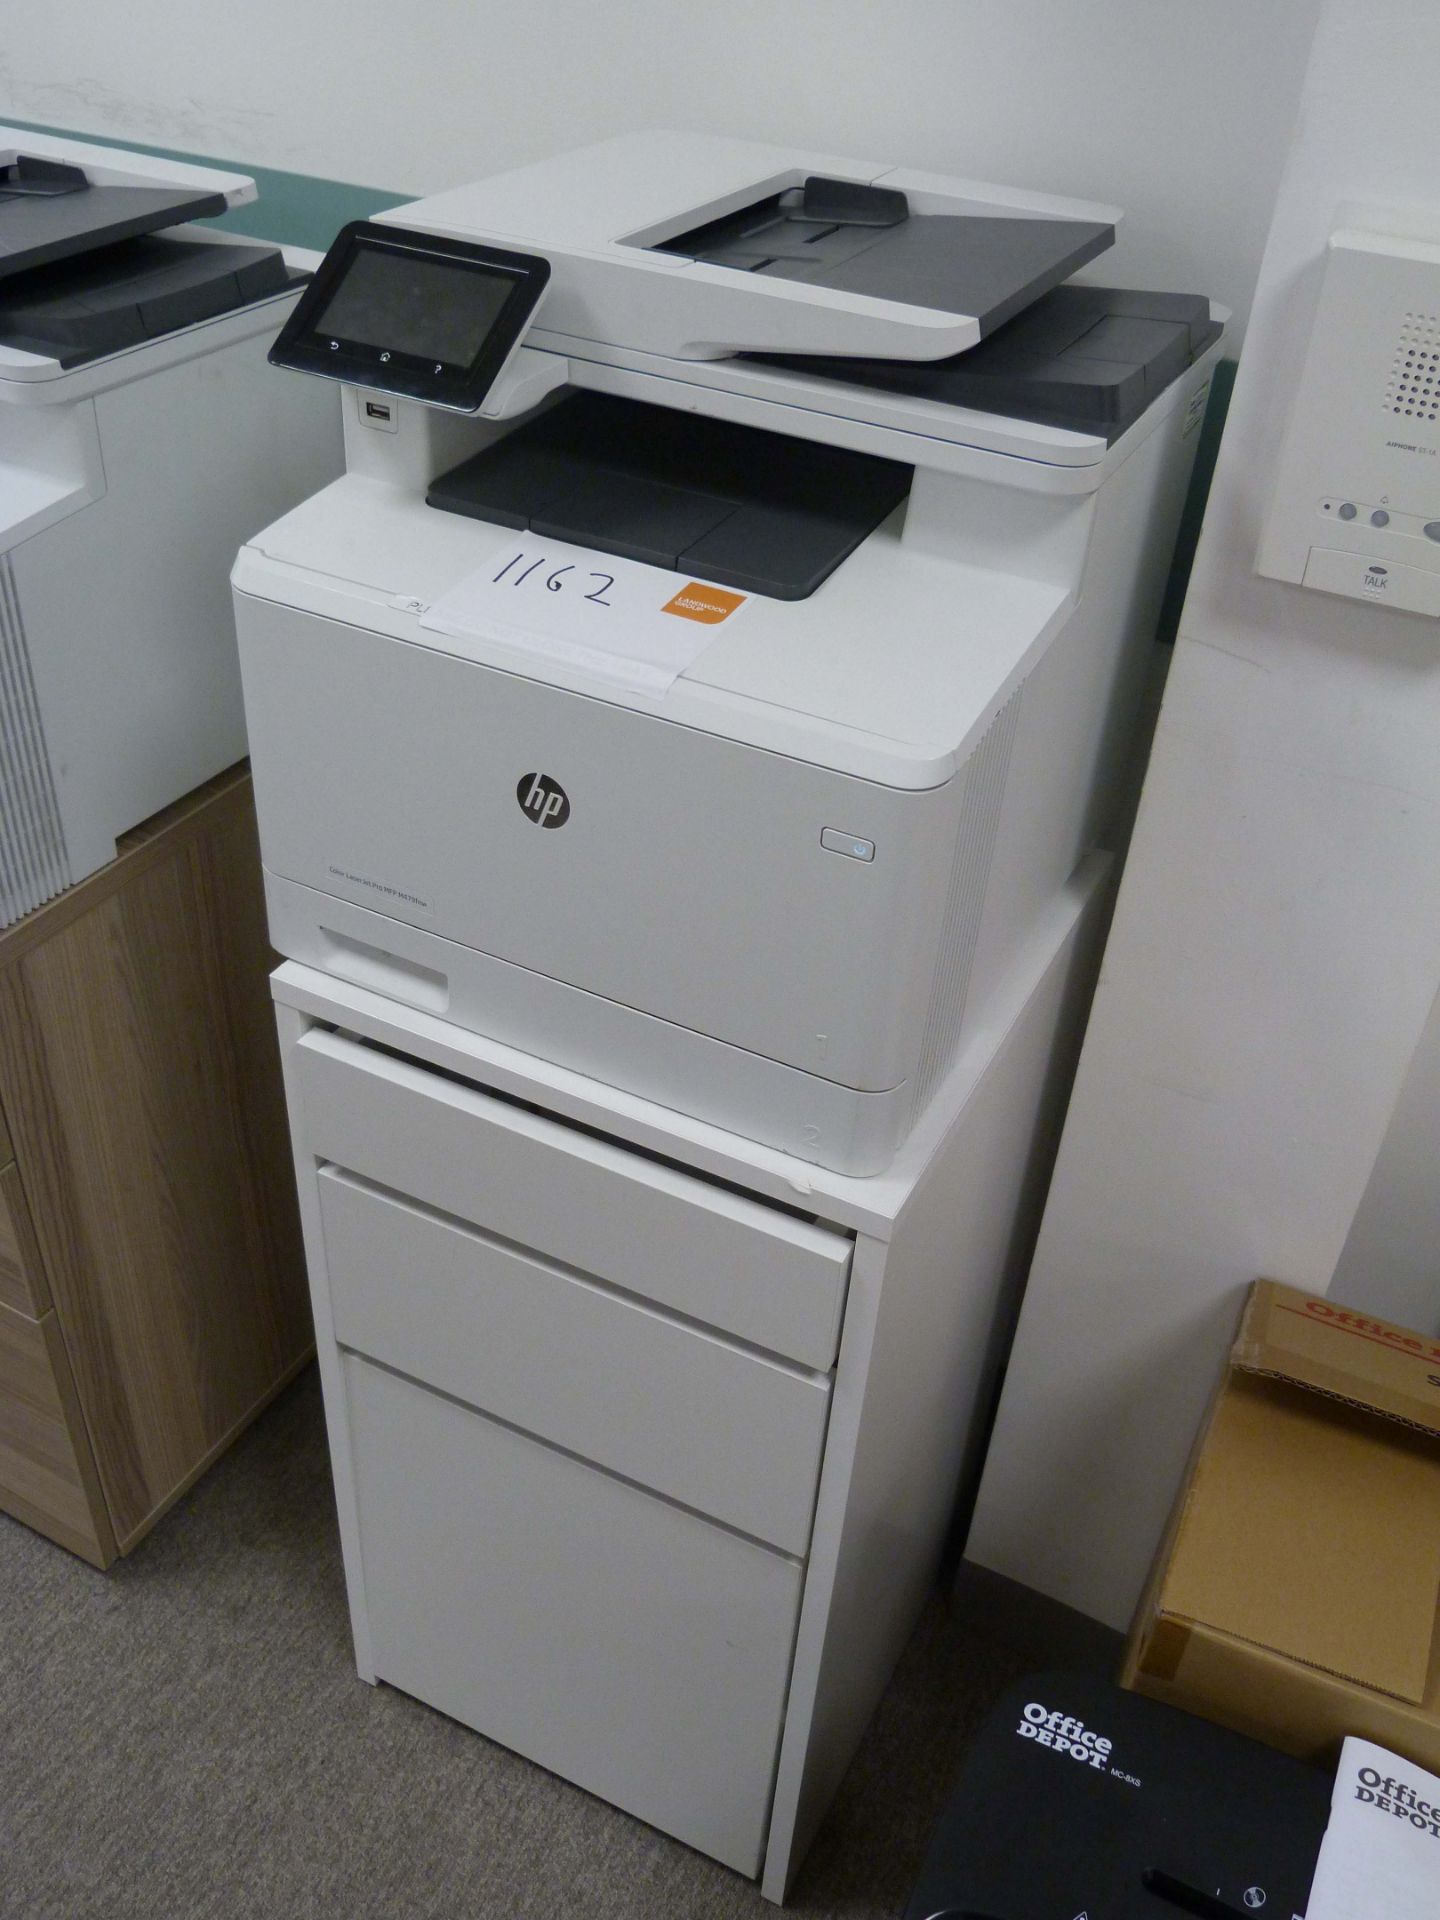 A HP Office LaserJet Pro MFP479dw Multi Function Printer with 3 drawer pedestal.